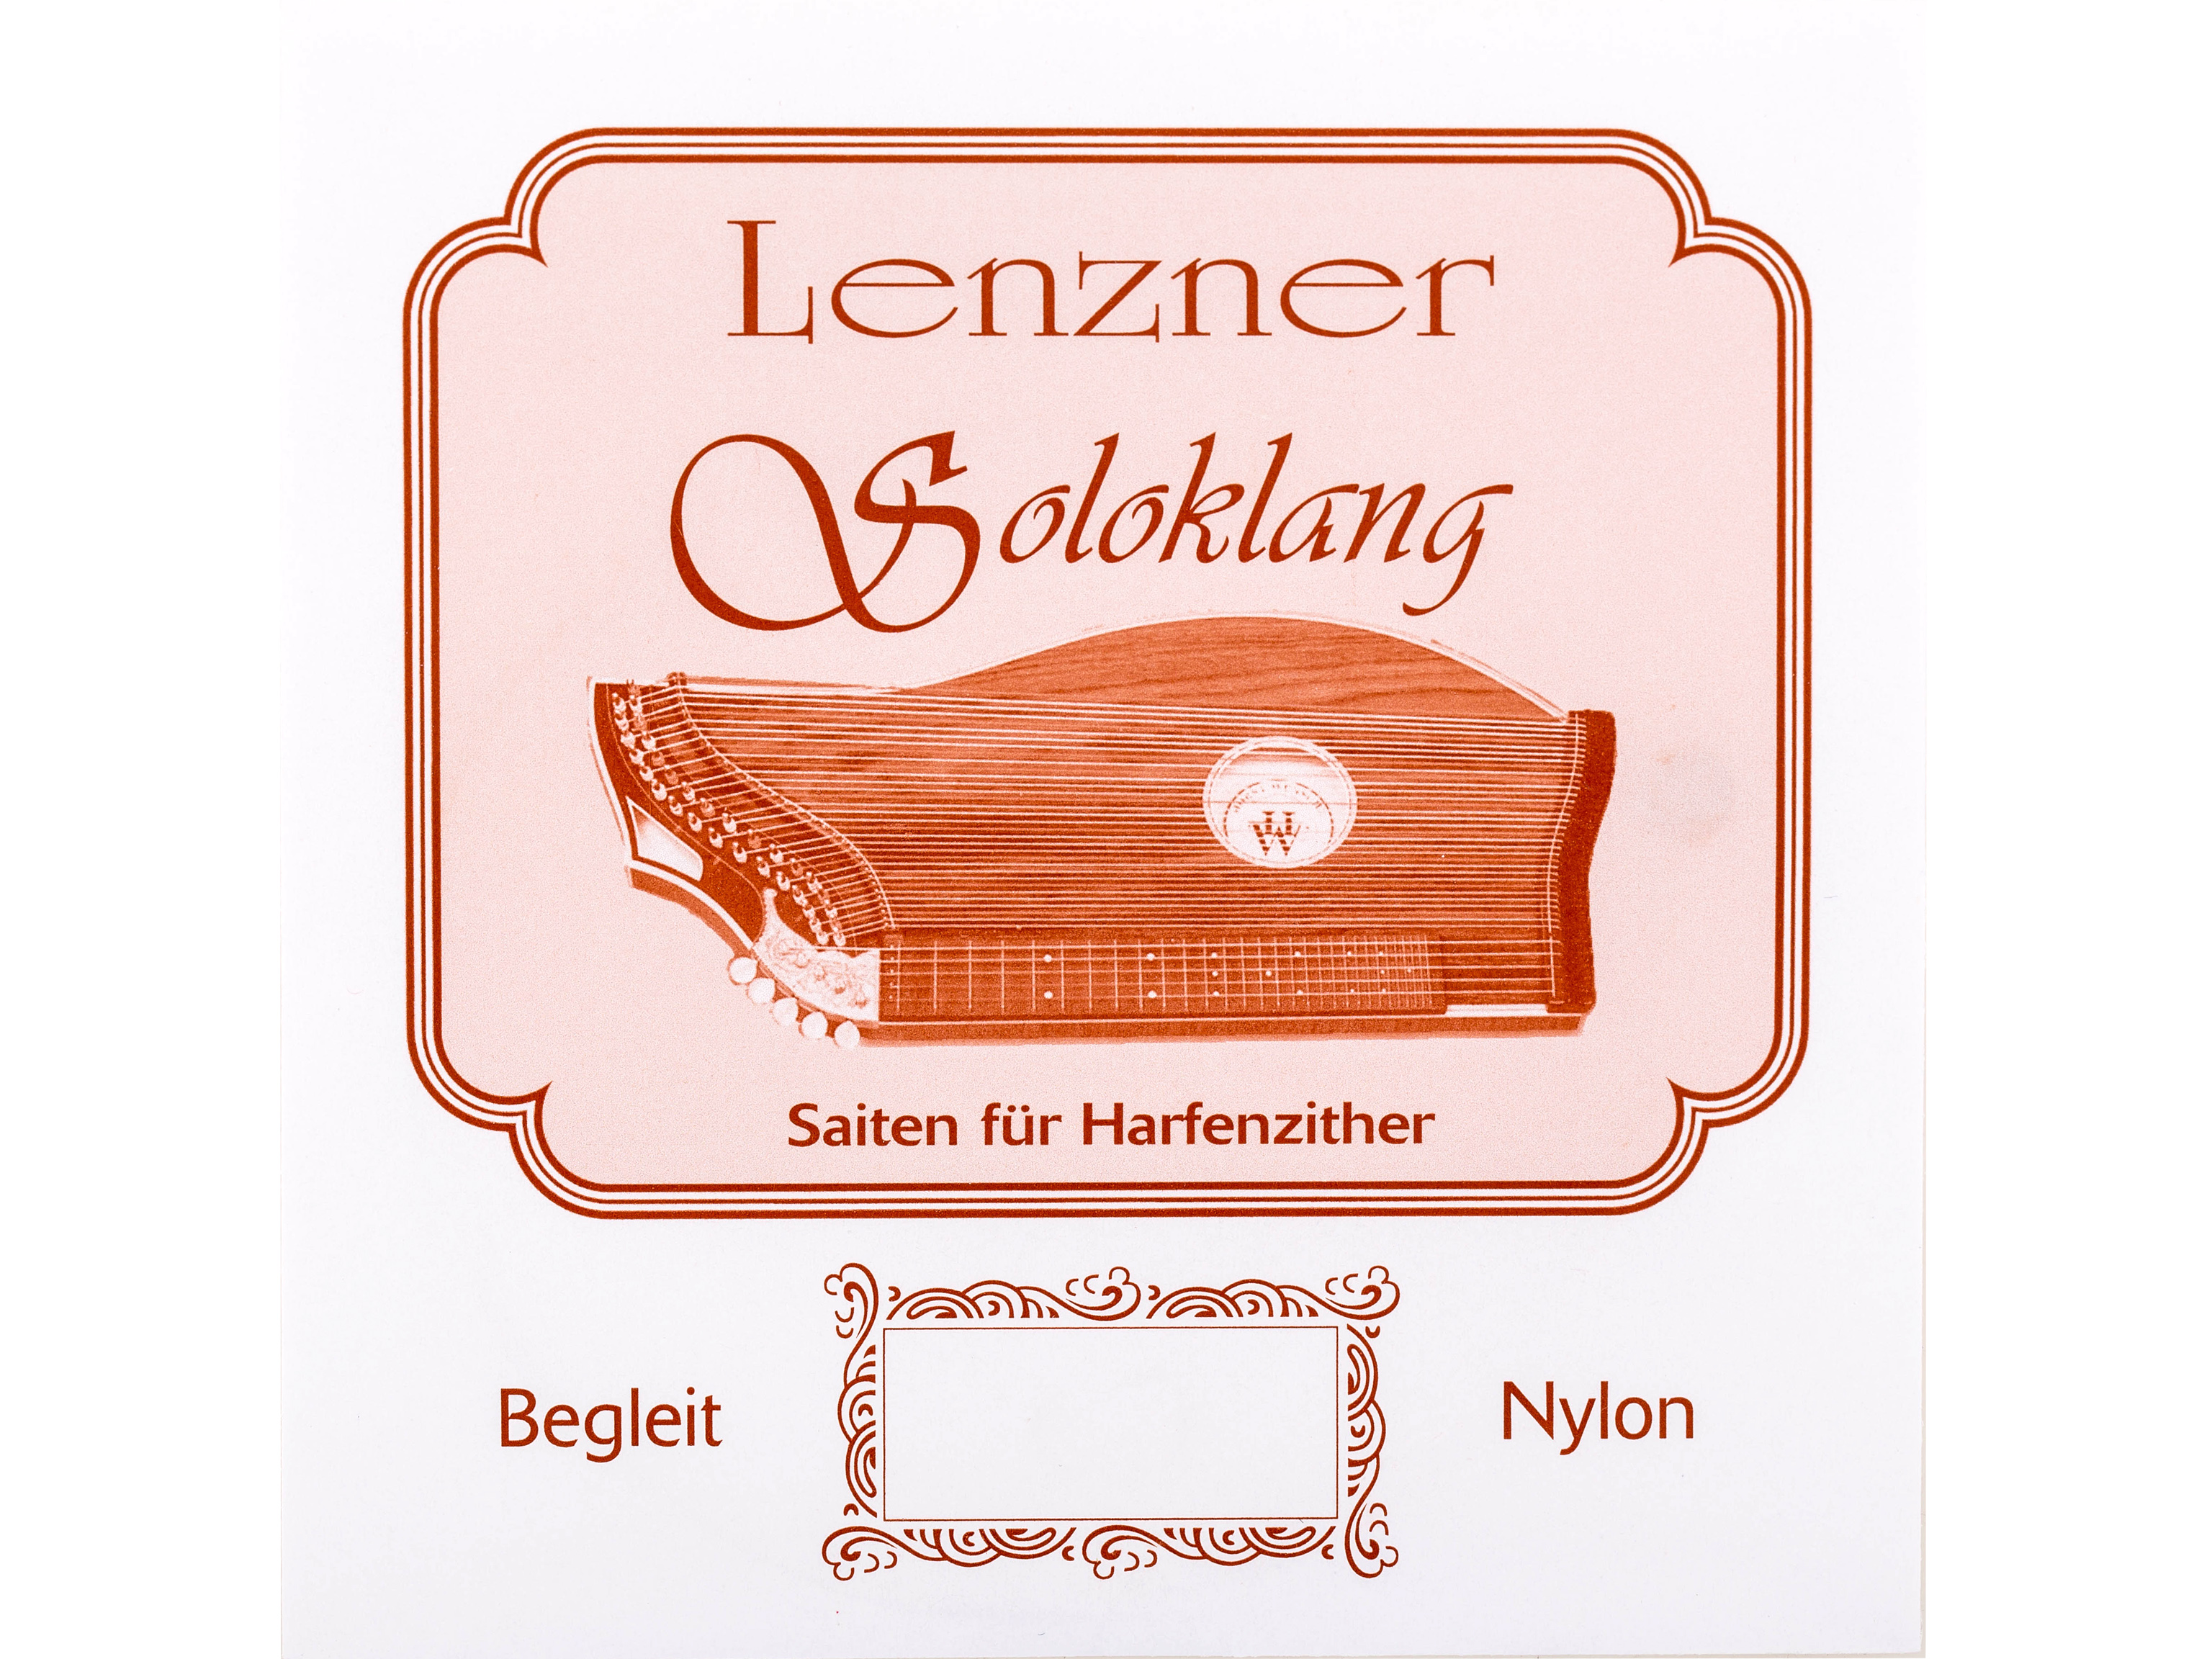 Lenzner 5. g Zithersaite Soloklang Begleit